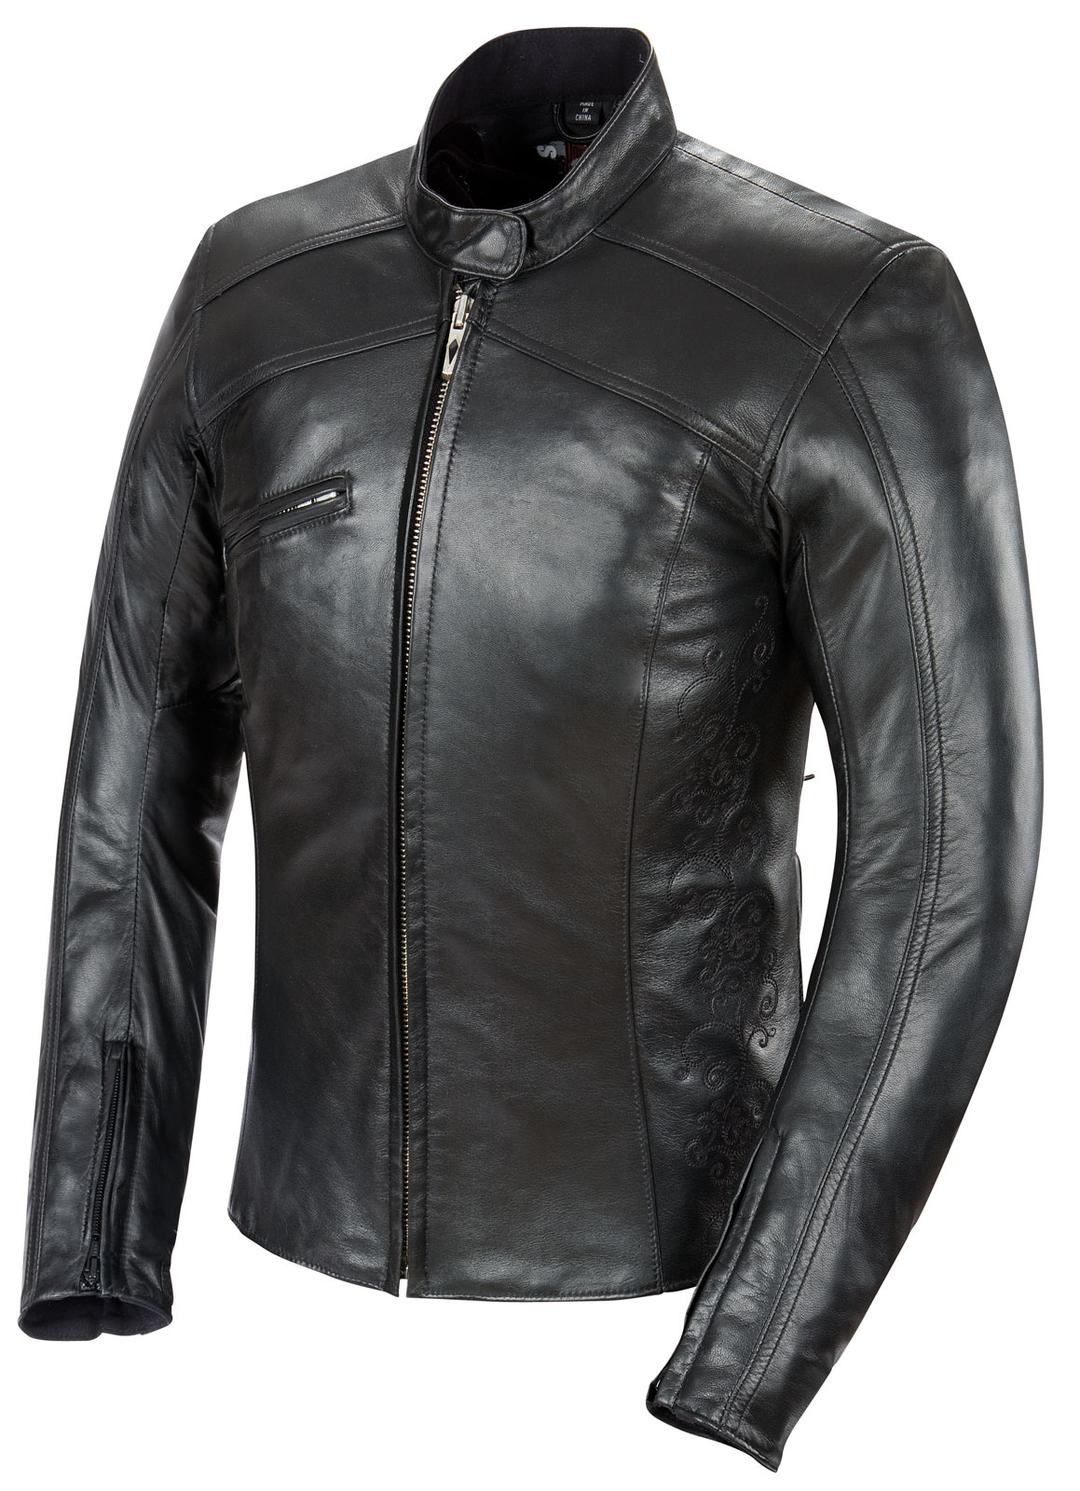 power trip women's leather motorcycle jacket